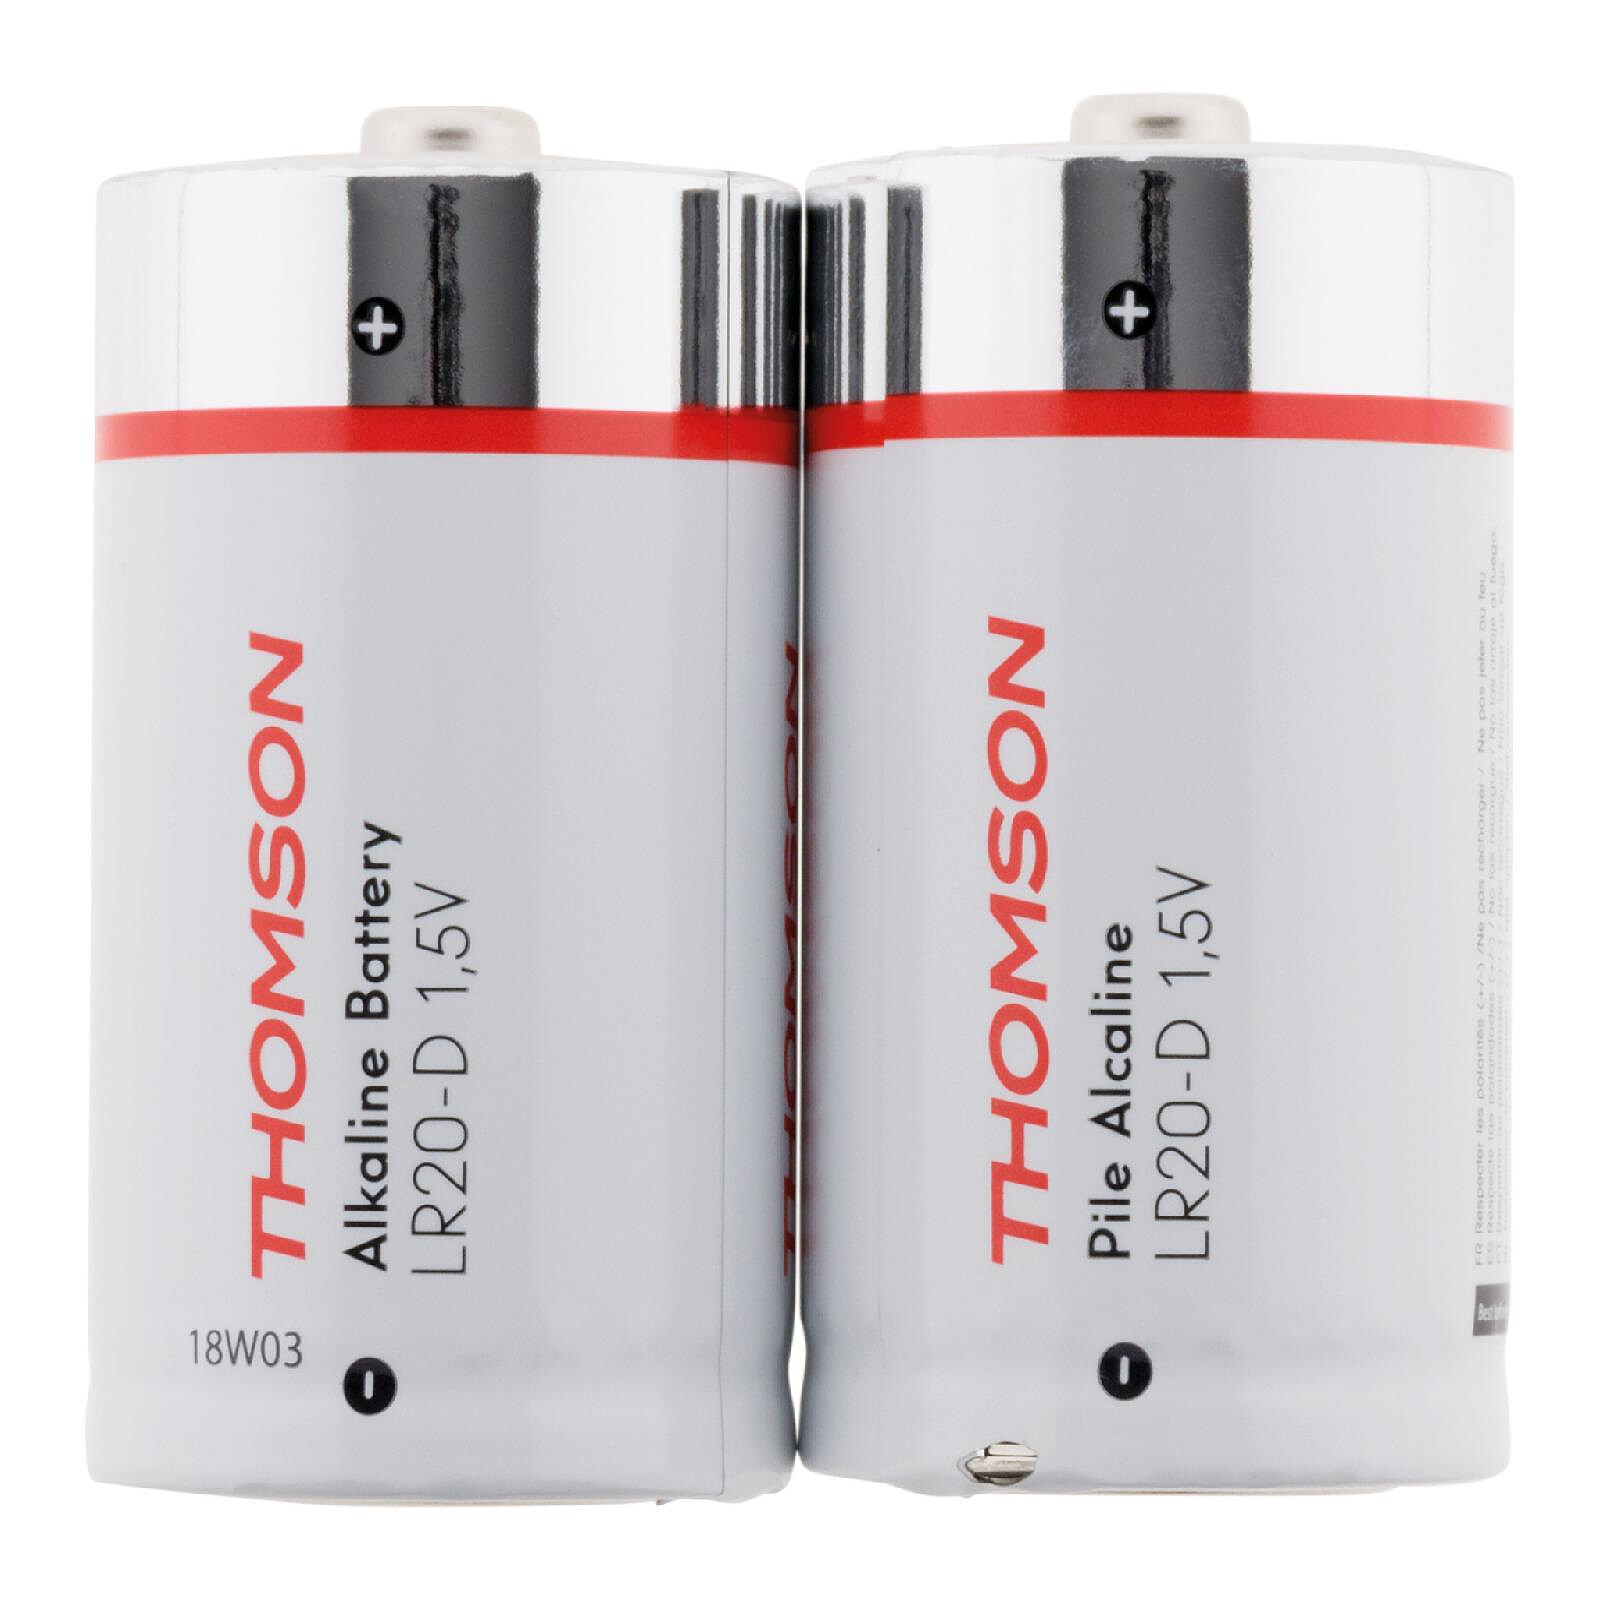 Pack 2 piles alcalines LR20 D 1,5 V - Thomson - Pile & chargeur - LDLC